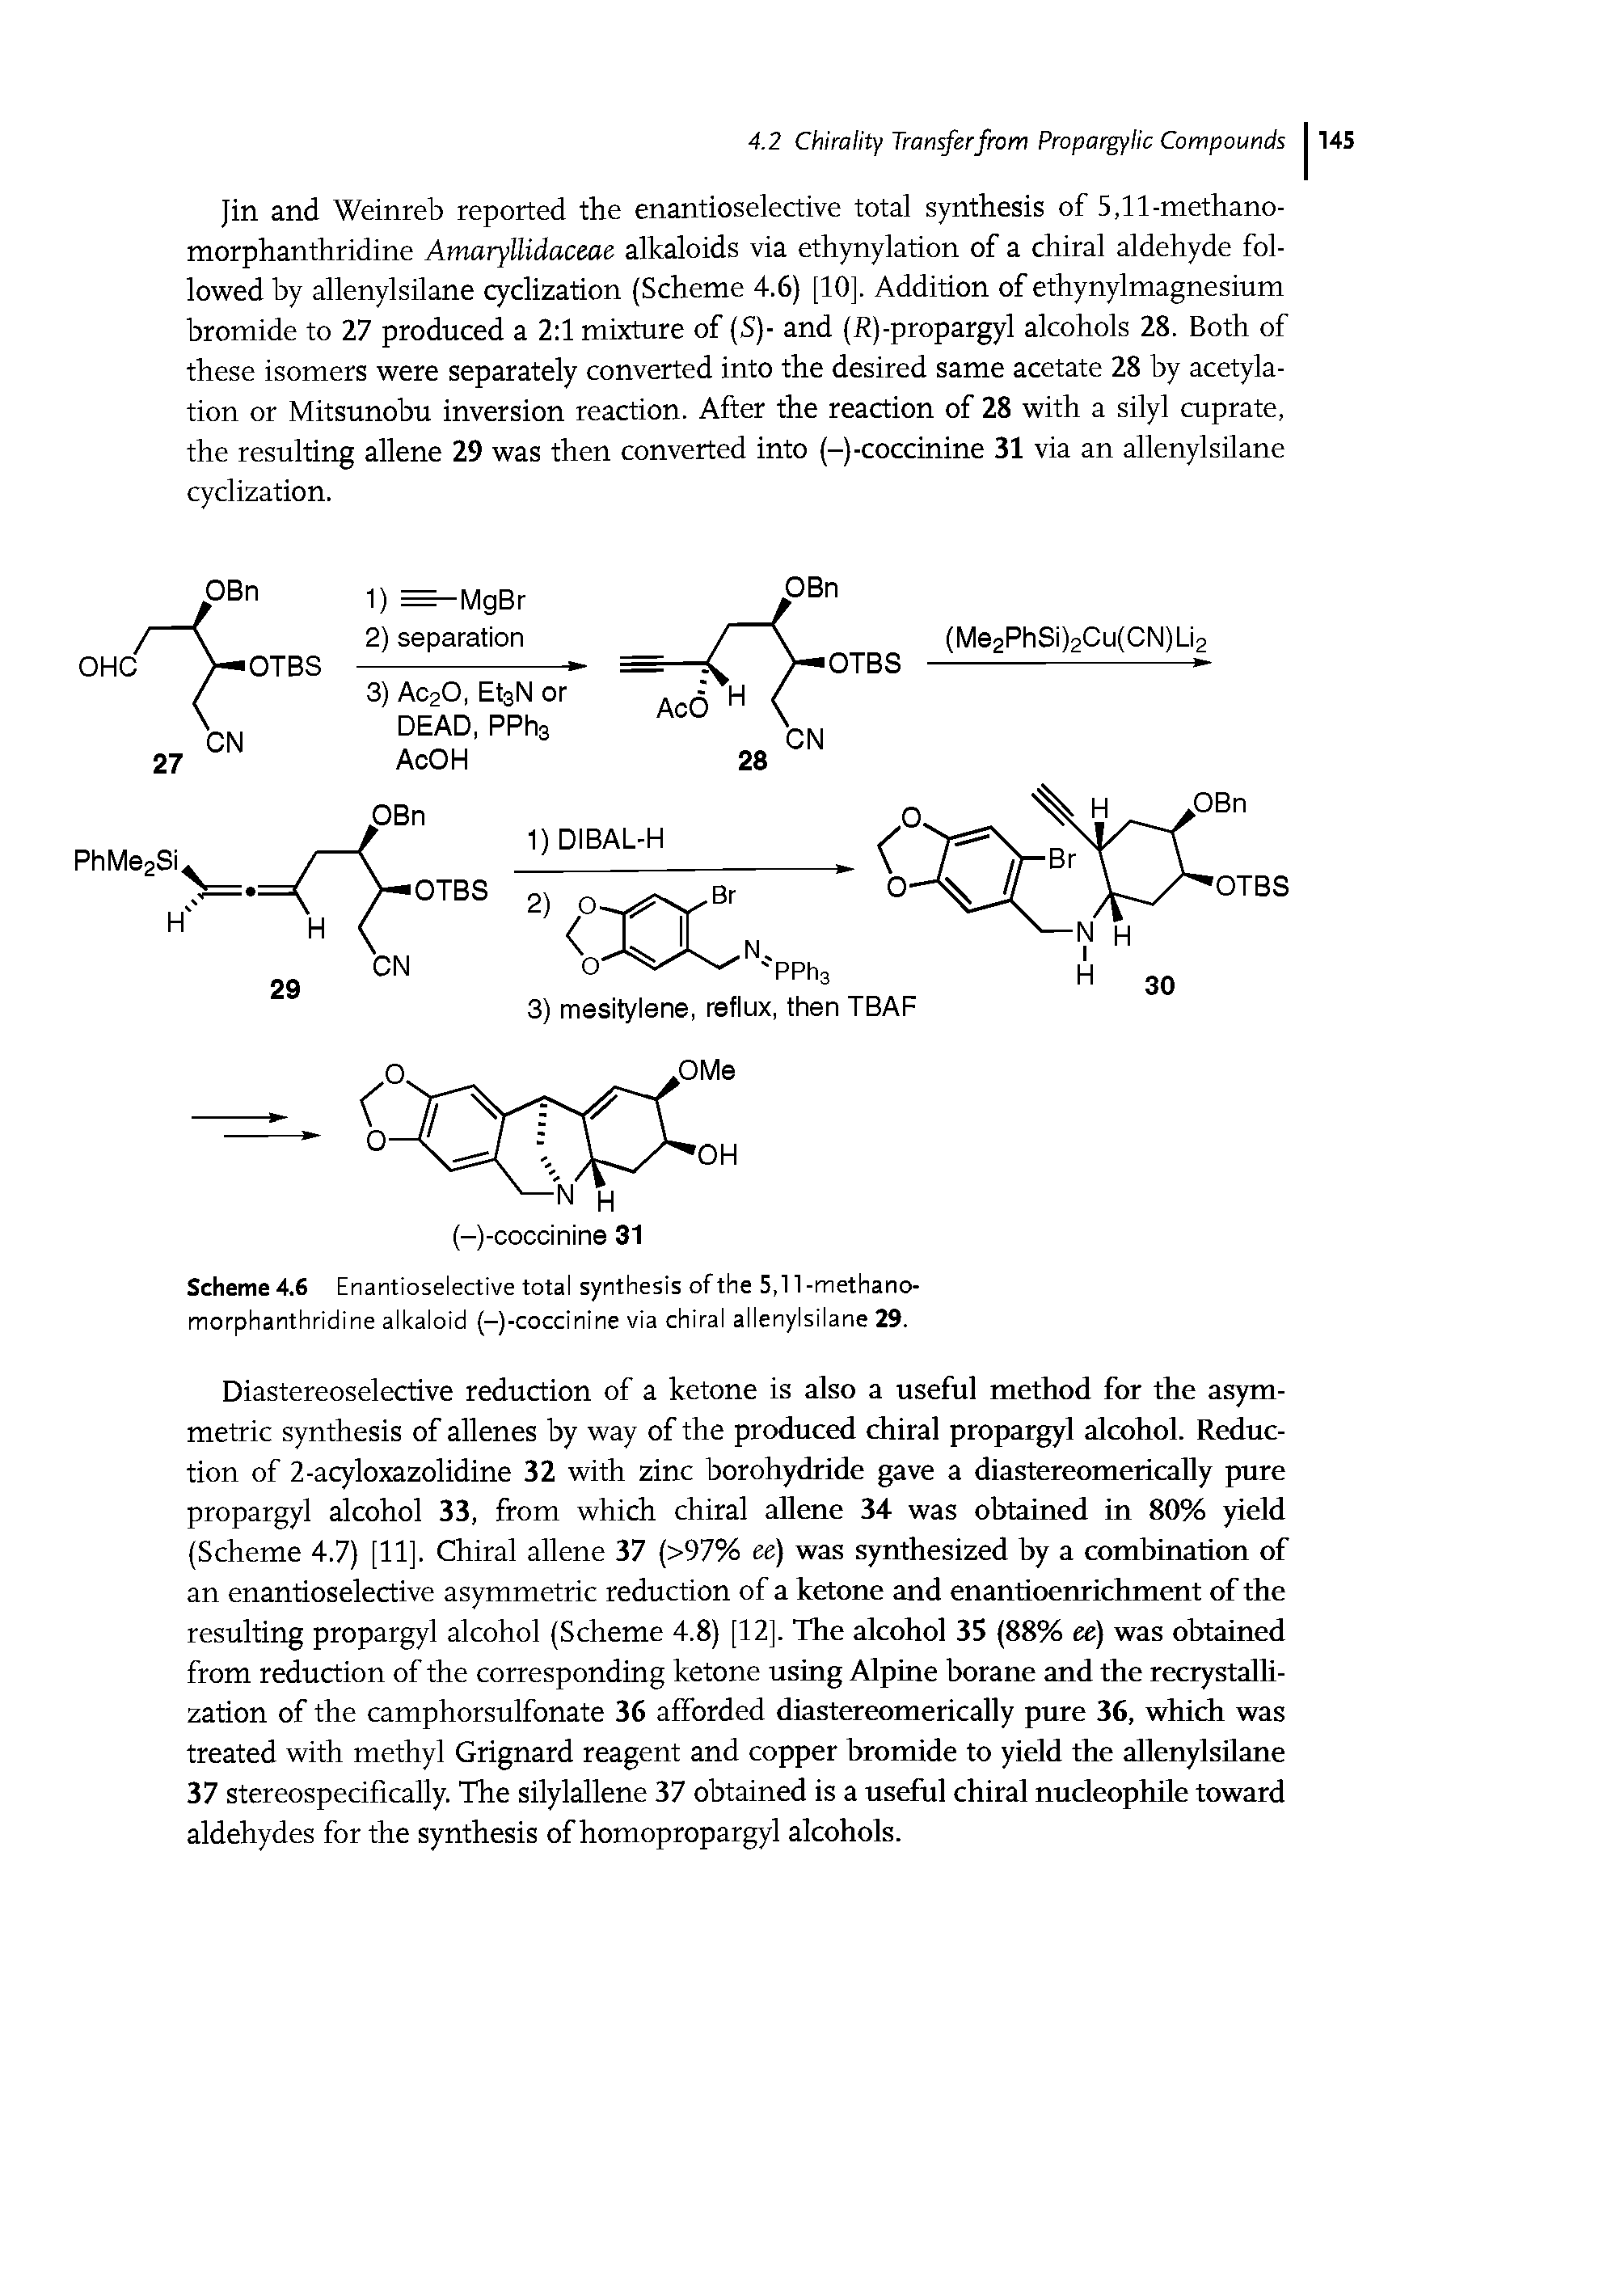 Scheme 4.6 Enantioselective total synthesis of the 5,11-methano-morphanthridine alkaloid (-)-coccinine via chiral allenylsilane 29.